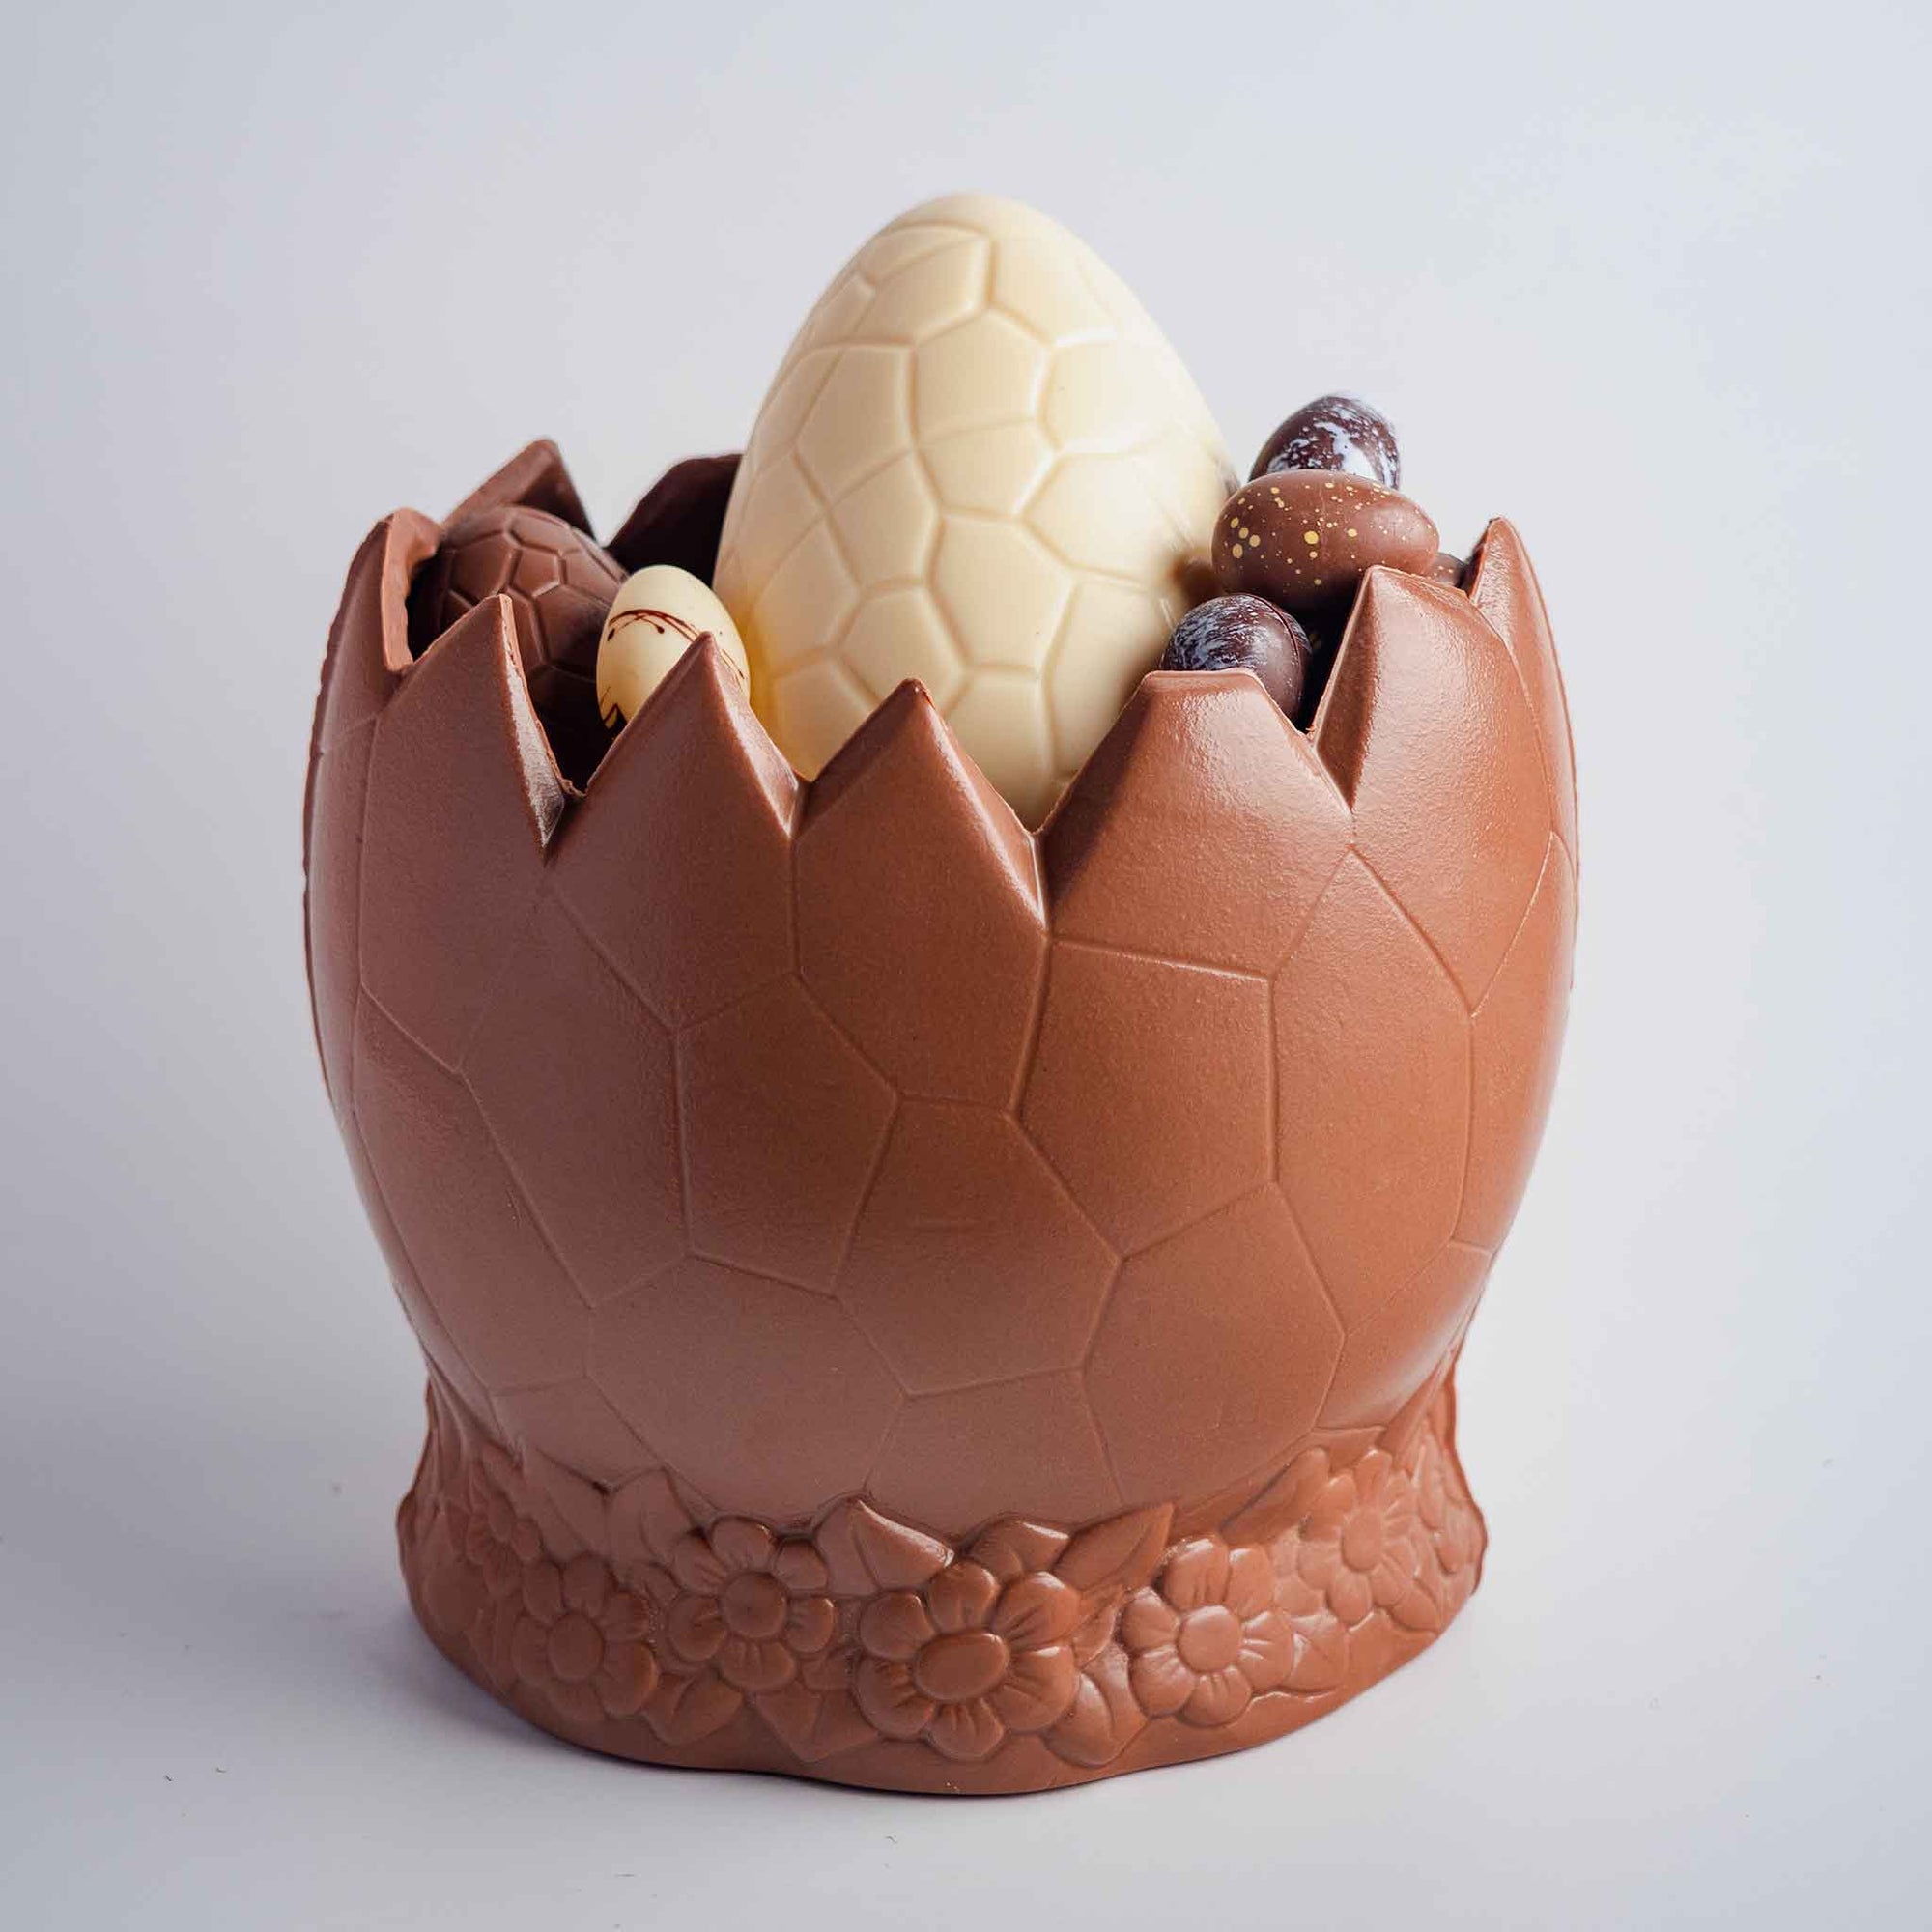 Easter Figurines: XL Hatched Egg